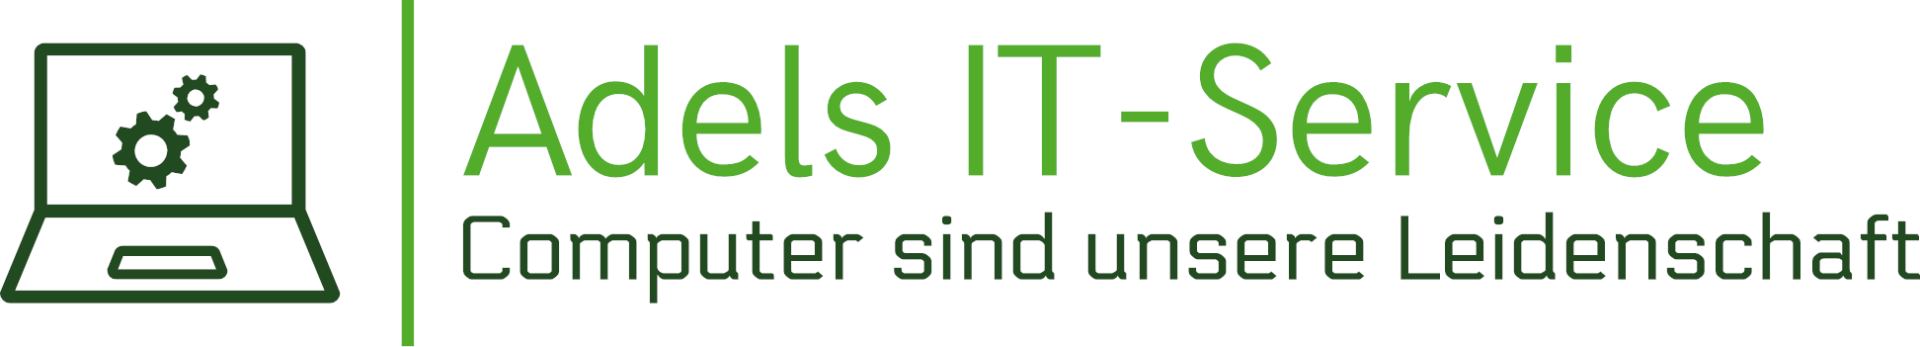 Adels-IT-Service-logo